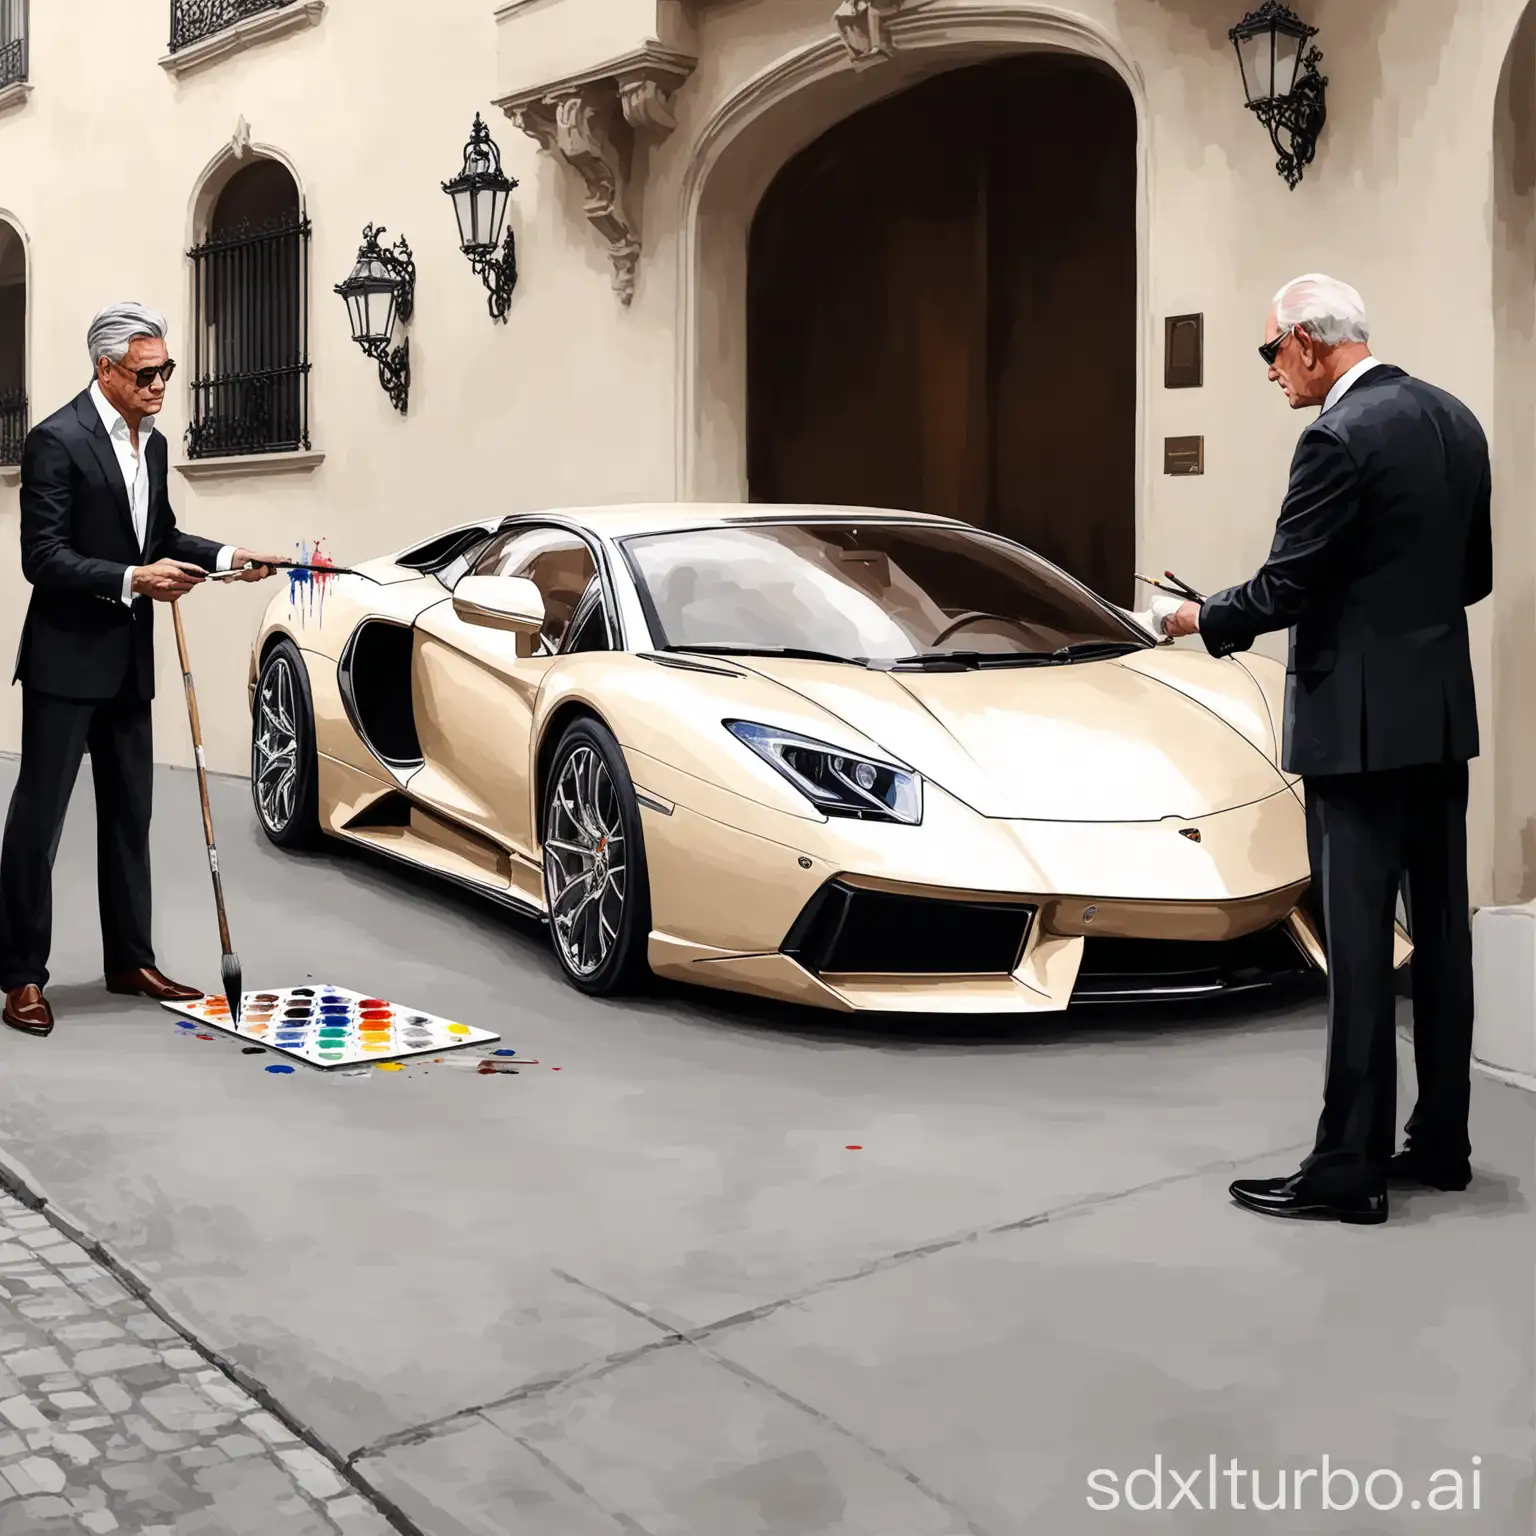 Affluent-Gentlemen-Purchasing-Luxurious-Automobile